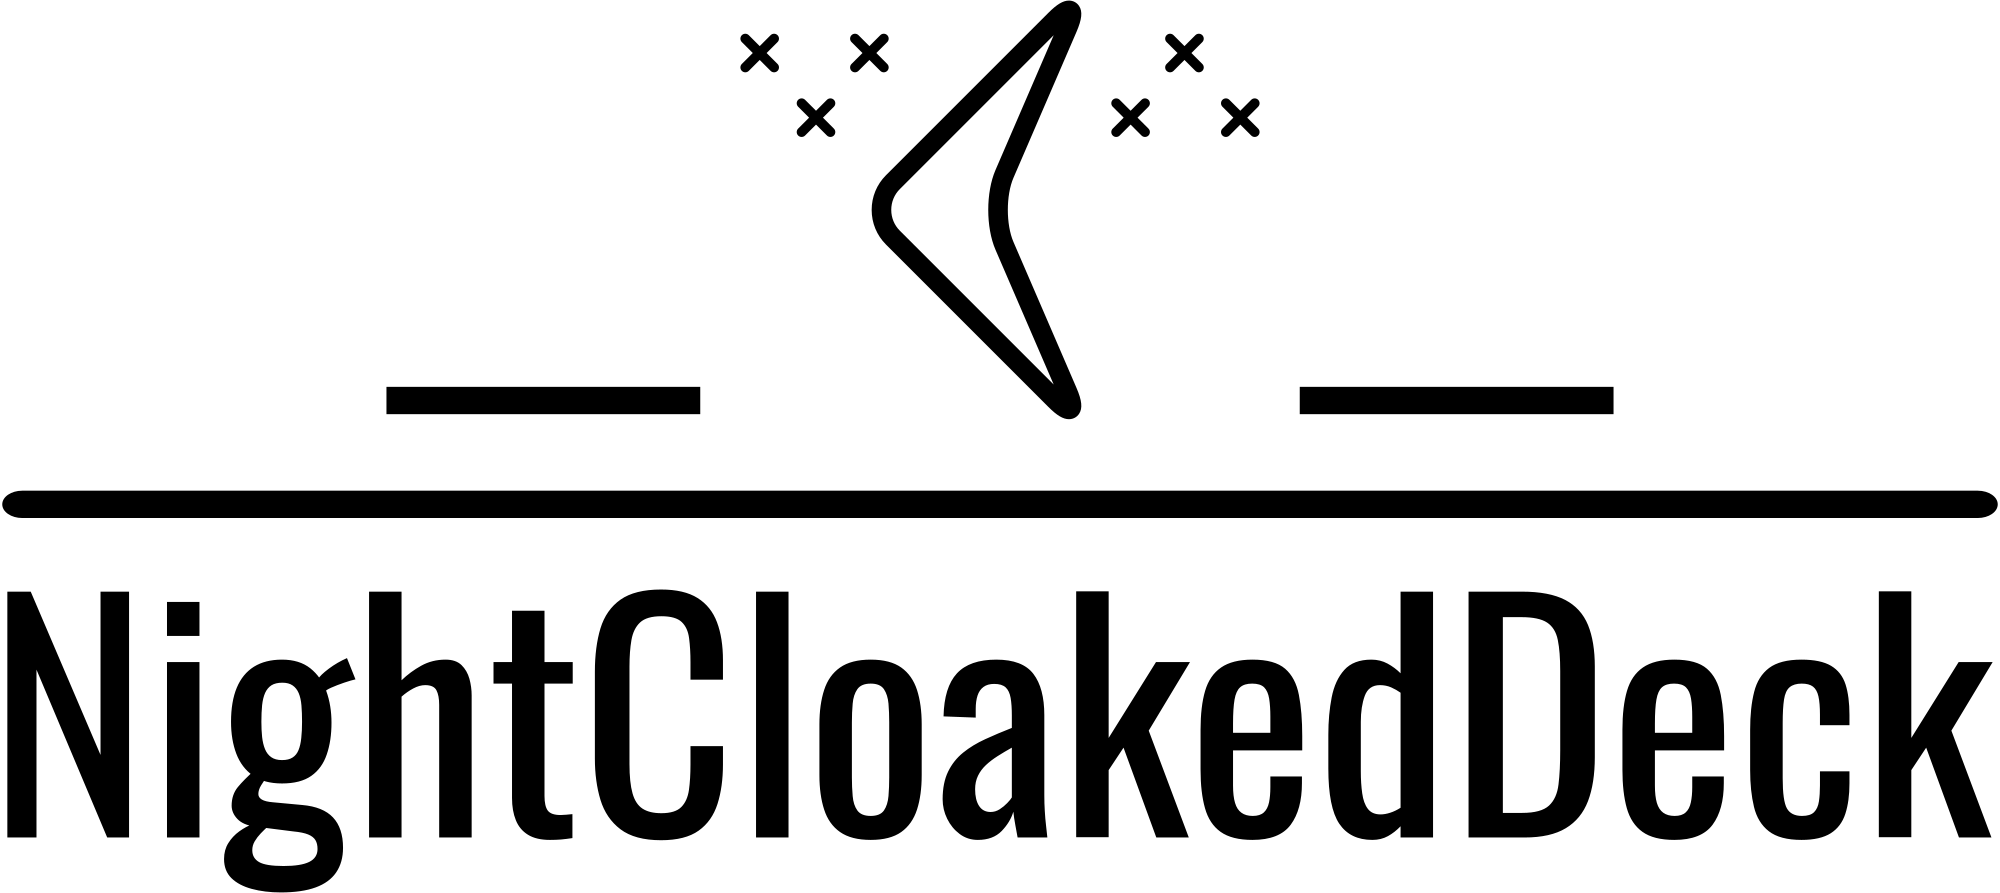 nightcloakeddeck-high-resolution-logo-black-transparent